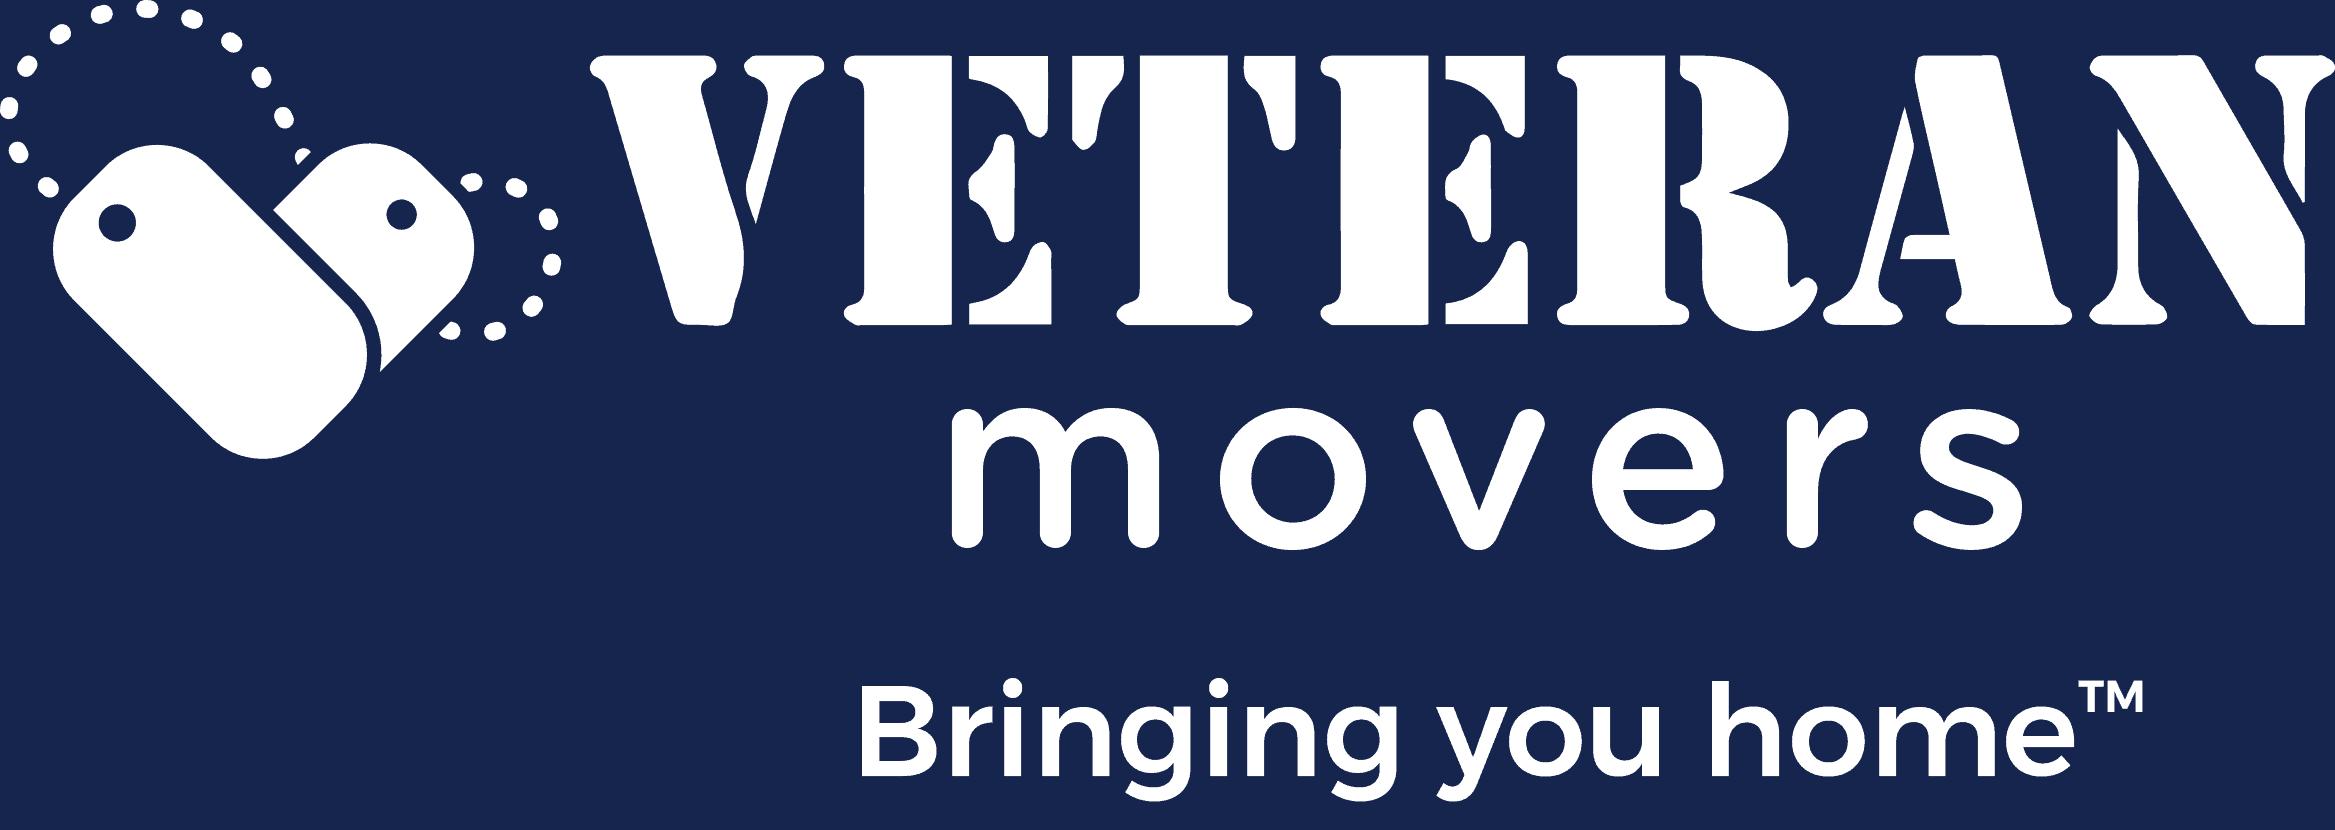 Veteran Logo